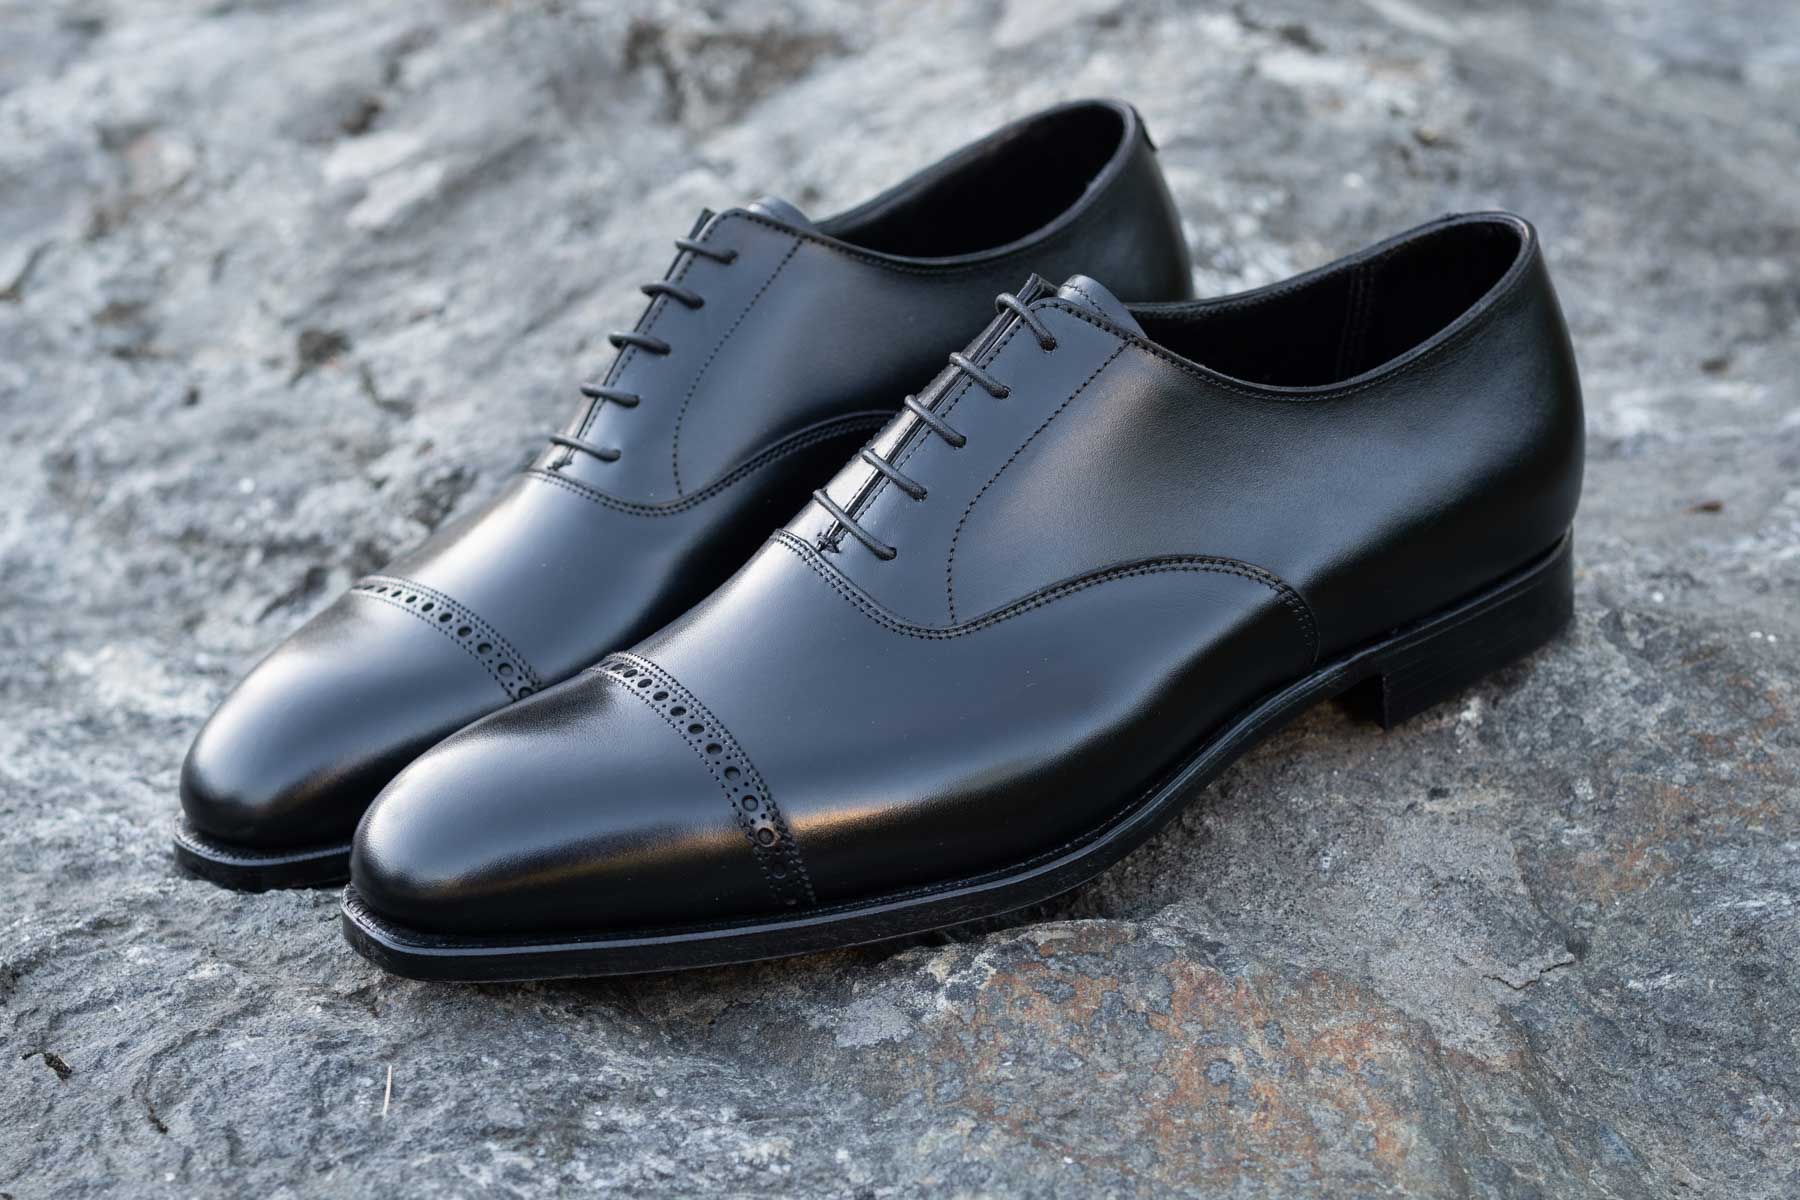 Crockett & Jones Belgrave Handgrade Black Oxford | The Noble Shoe